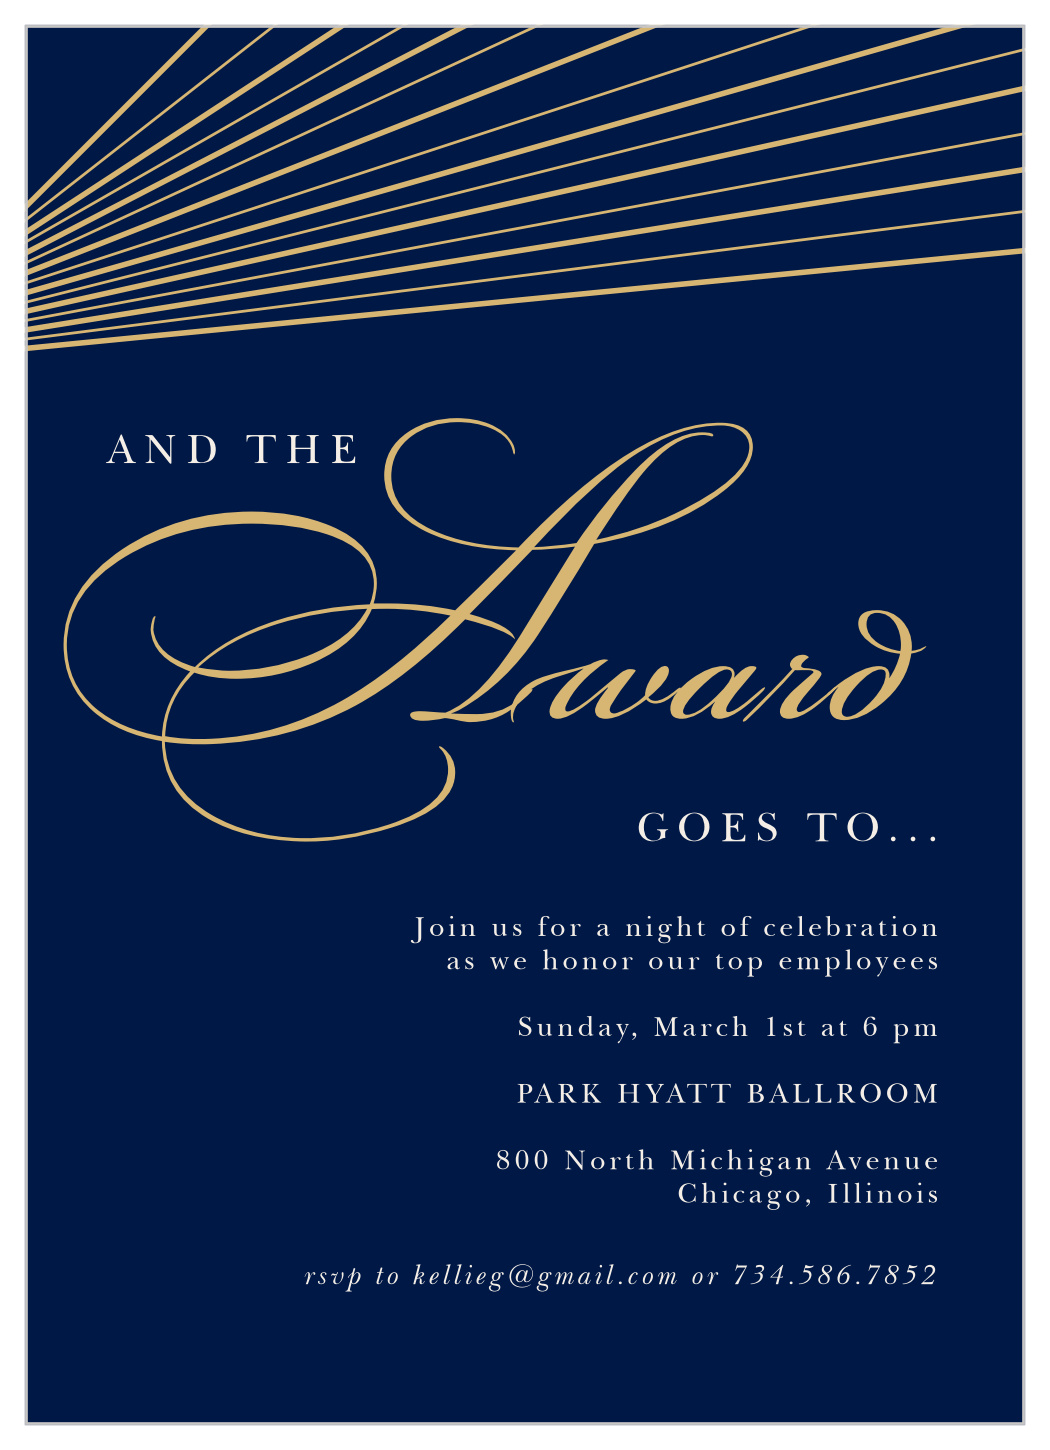 Awarded Glam Gala Invitation by Basic Invite